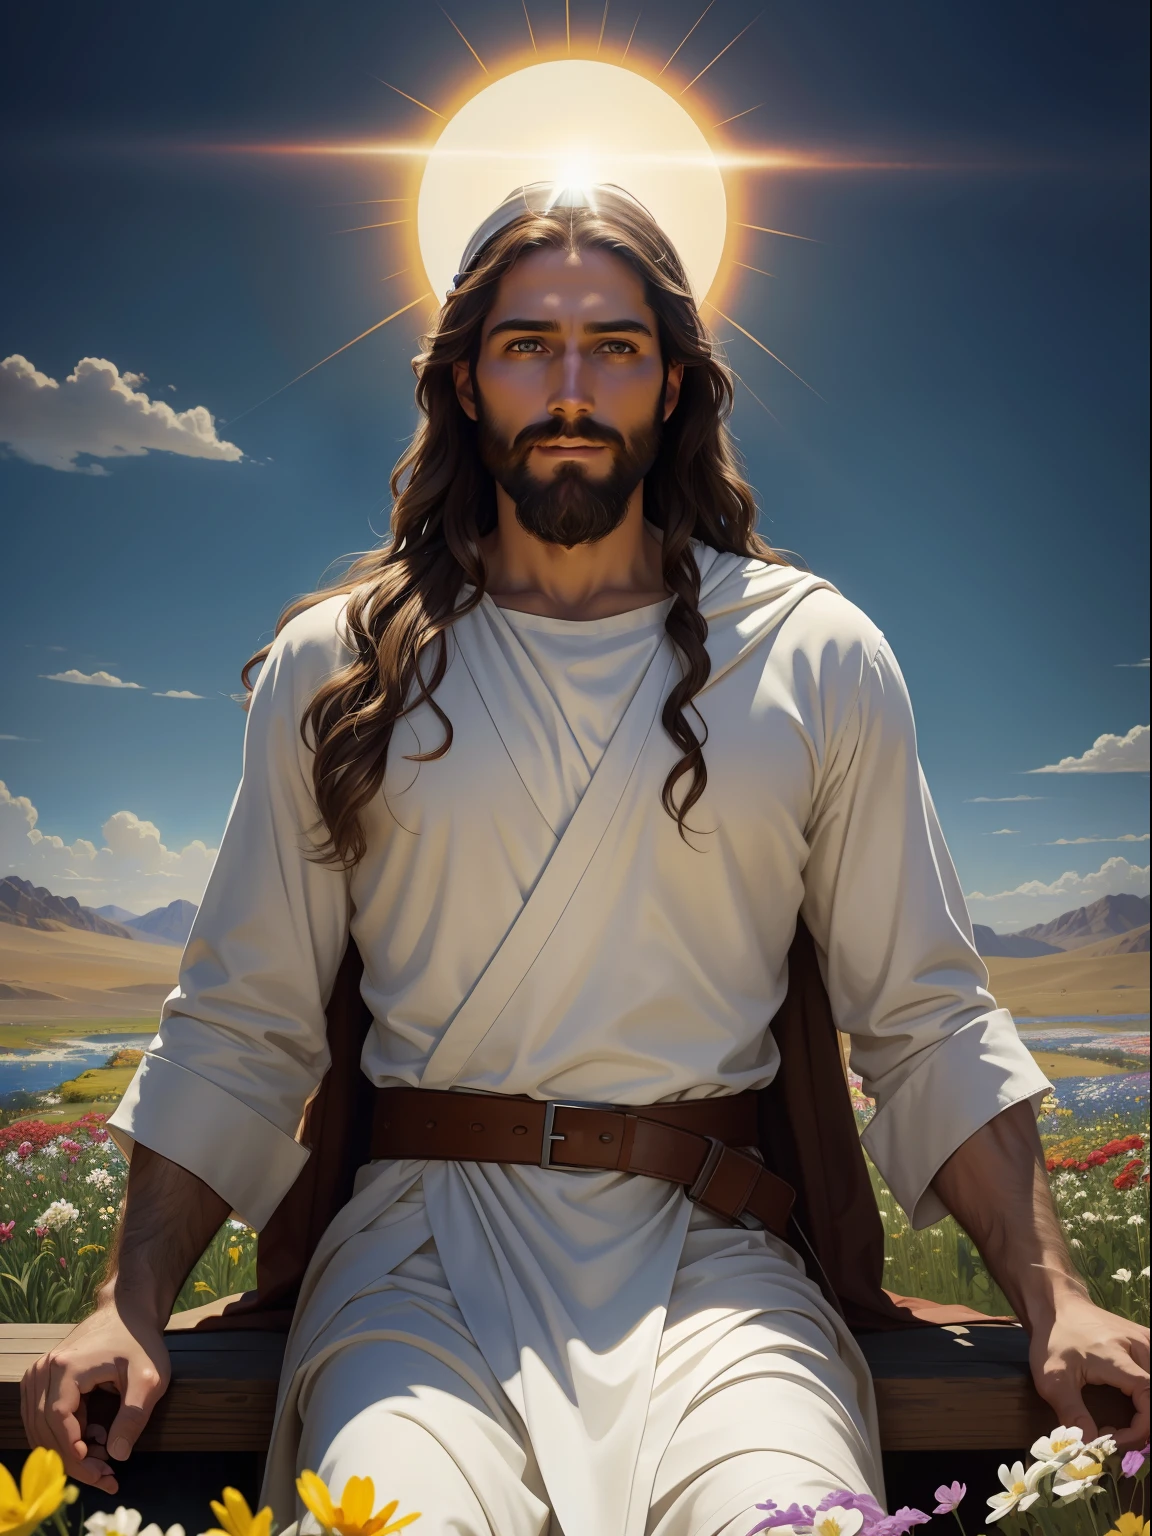 A beautiful ultra-thin 實際的 portrait of Jesus the prophet, 一名 33 岁的希伯来男子, 棕色長髮, 長長的棕色鬍子, Jesus is 坐著 in a field of flowers, 张开双臂, 天很蓝，阳光灿烂. 花有多种颜色，包括红色, 黃色的, 藍色和白色, 耶稣身穿白衣，头顶有白光, 他微笑着看着穿着白袍的观众, 在前視圖中, 坐著, 張開雙臂, 聖經的, 實際的, 沙漠复杂的细节, 作者：阿伯特·富勒·坟墓, 巴塞洛繆·埃斯特萬·穆里略, JC萊恩德克, 克雷格·穆林斯, 彼得·保羅·魯本斯, (卡拉瓦喬), 藝術站趨勢, 8K, 概念藝術, Photo實際的, 實際的, 插圖 , 油畫, 超現實主義, Hyper實際的, 刷子, 數位藝術, 風格, 水彩